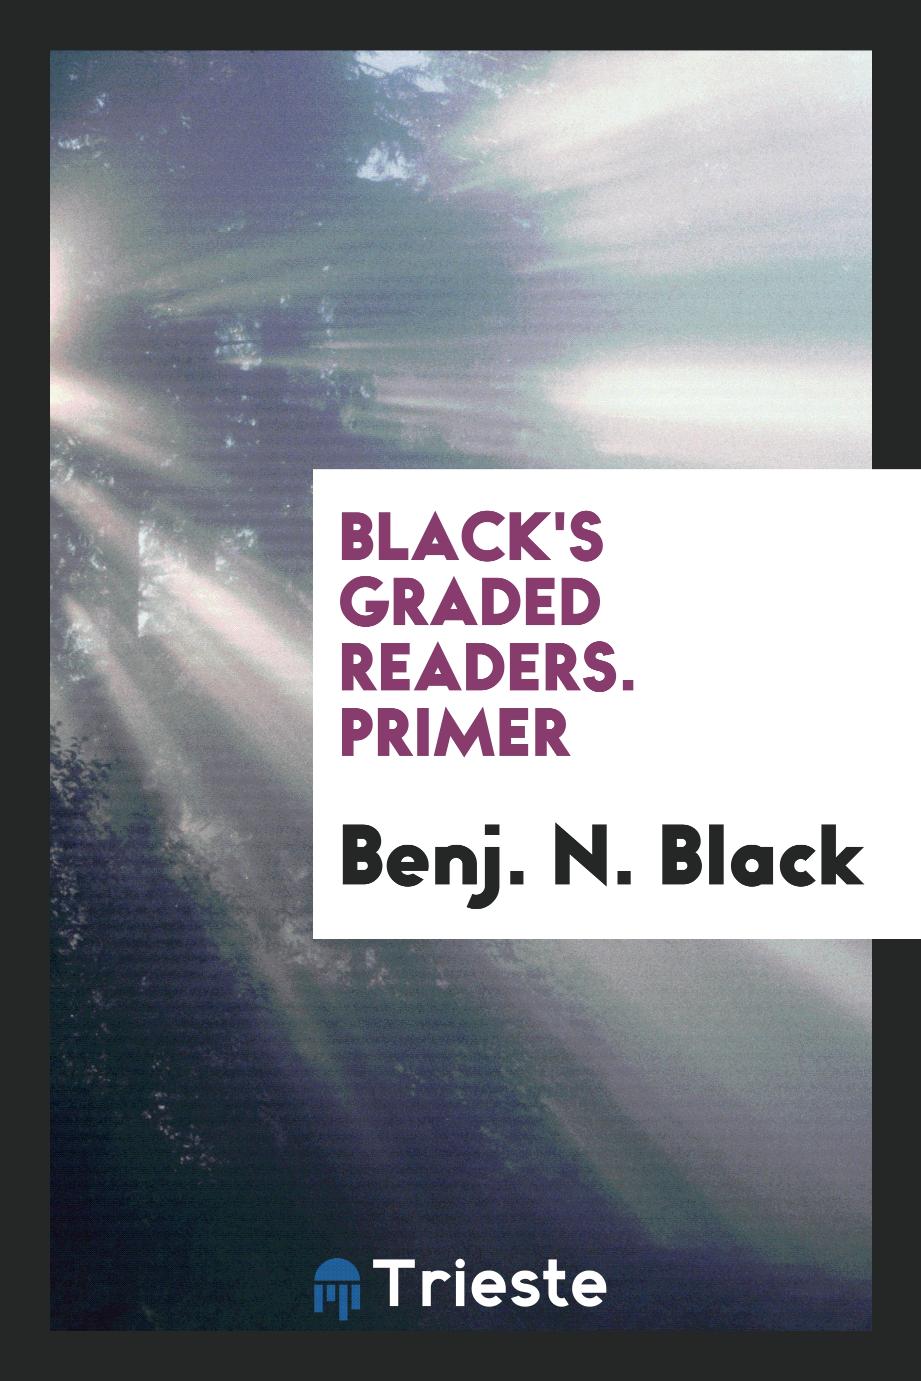 Black's graded readers. Primer